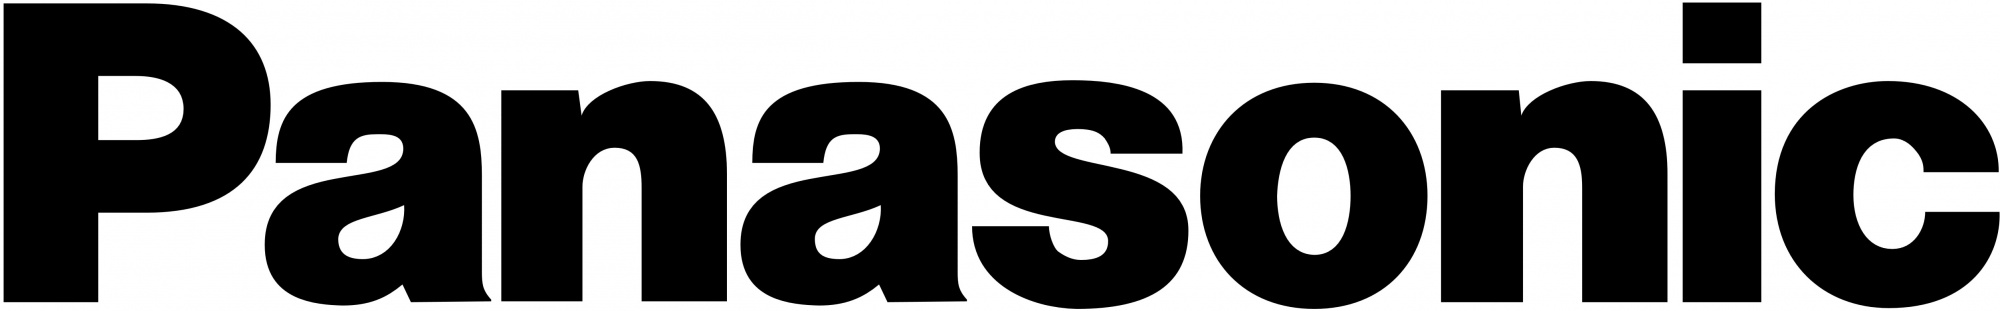 PANASONIC логотип